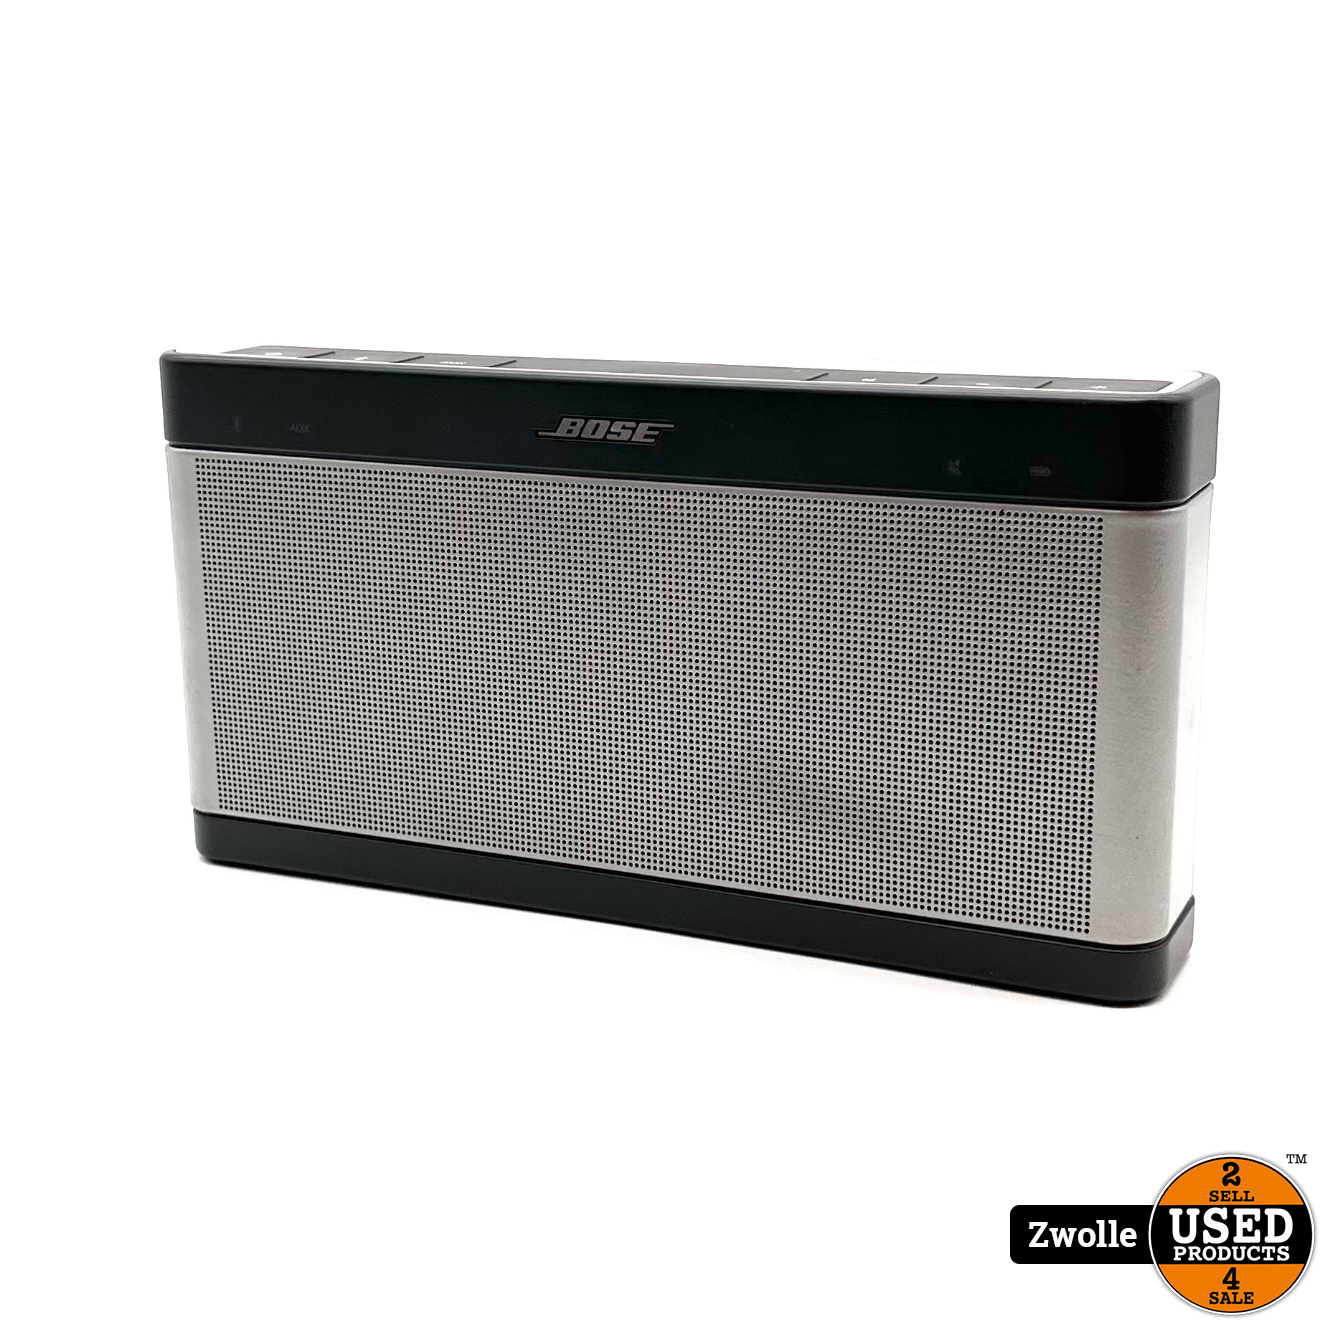 fonds toeter foto Bose Soundlink Bluetooth Speaker 3 - Used Products Zwolle